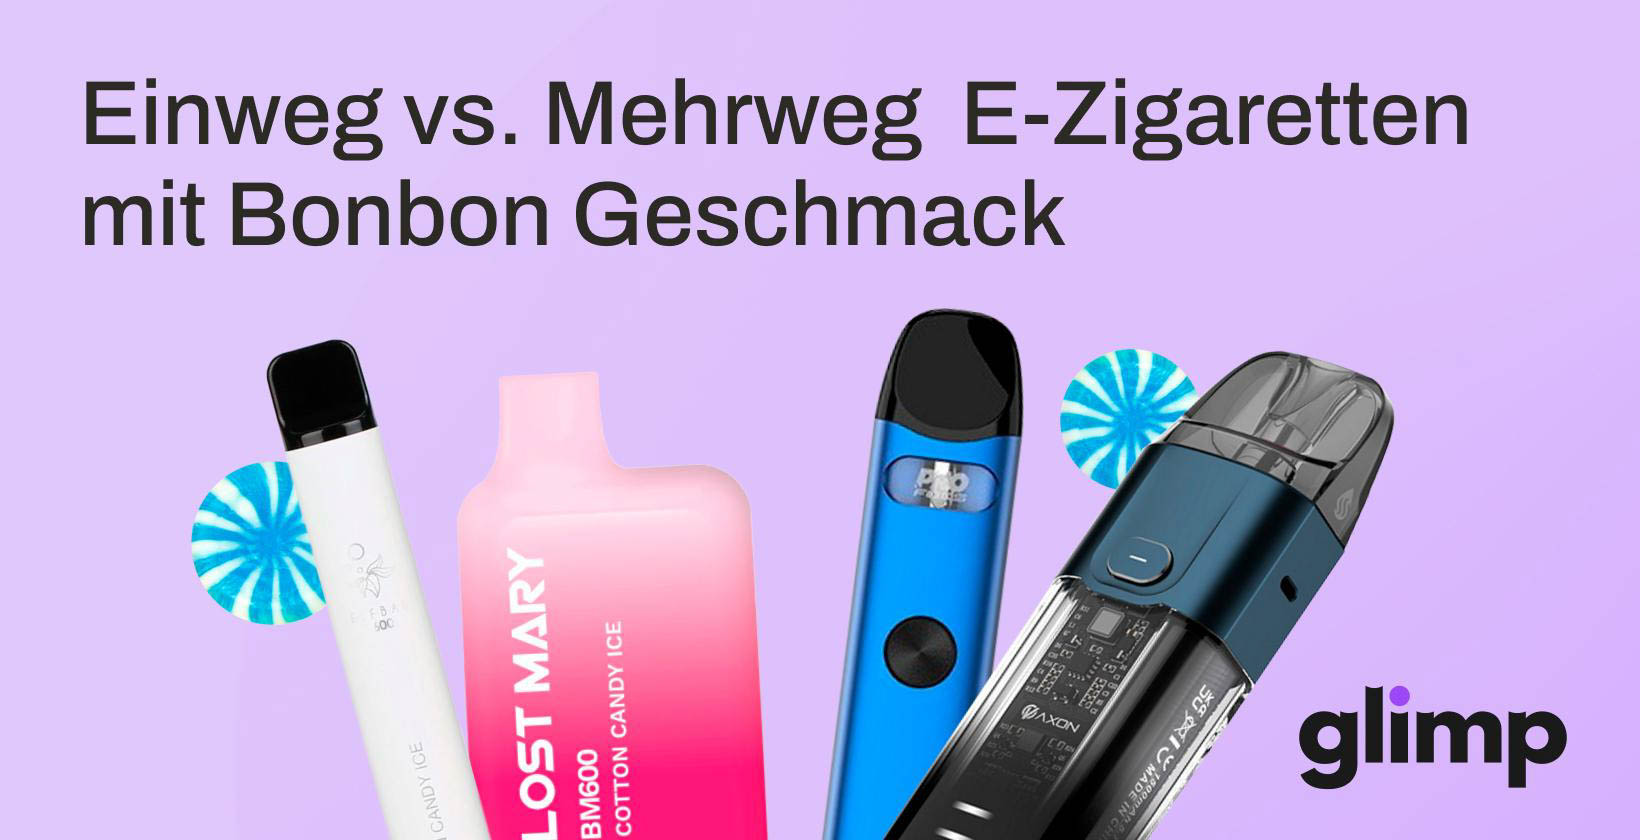 Einweg vs. Mehrweg E-Zigaretten mit Bonbon Geschmack: Vergleich